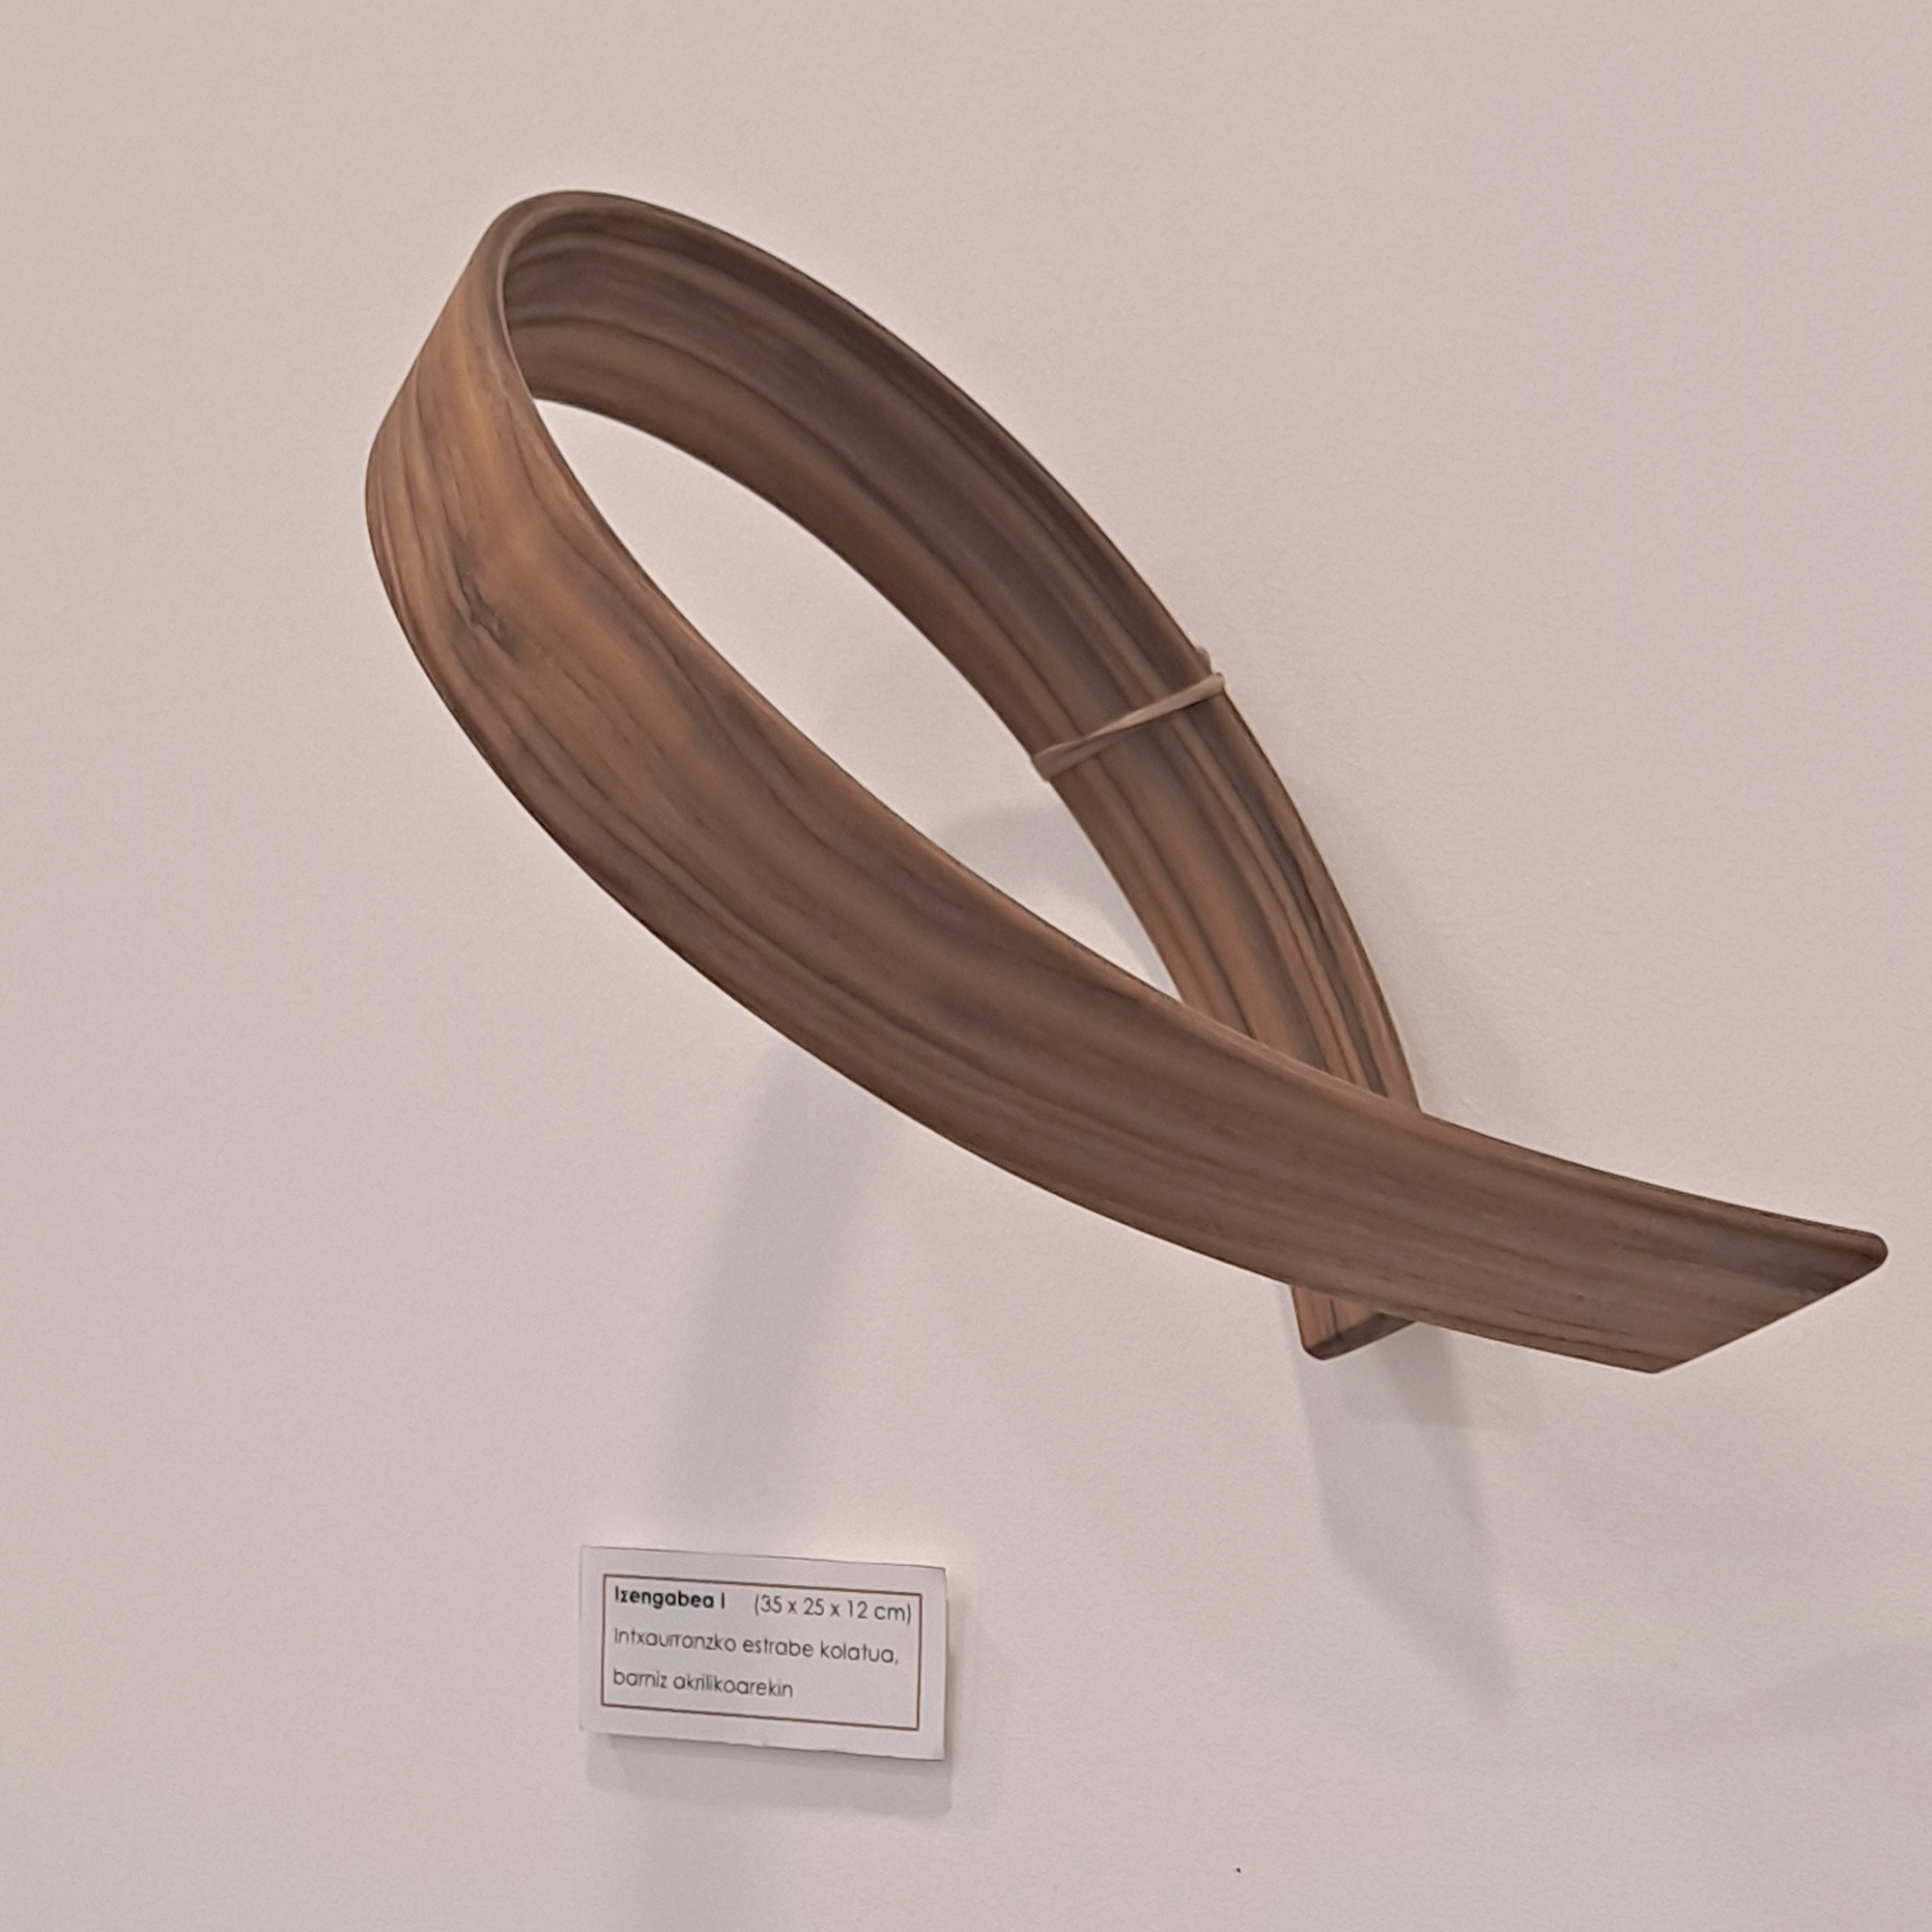 Arte-escultura-madera-exposicion-Cruz-Ituarte-madera-Gipuzkoa